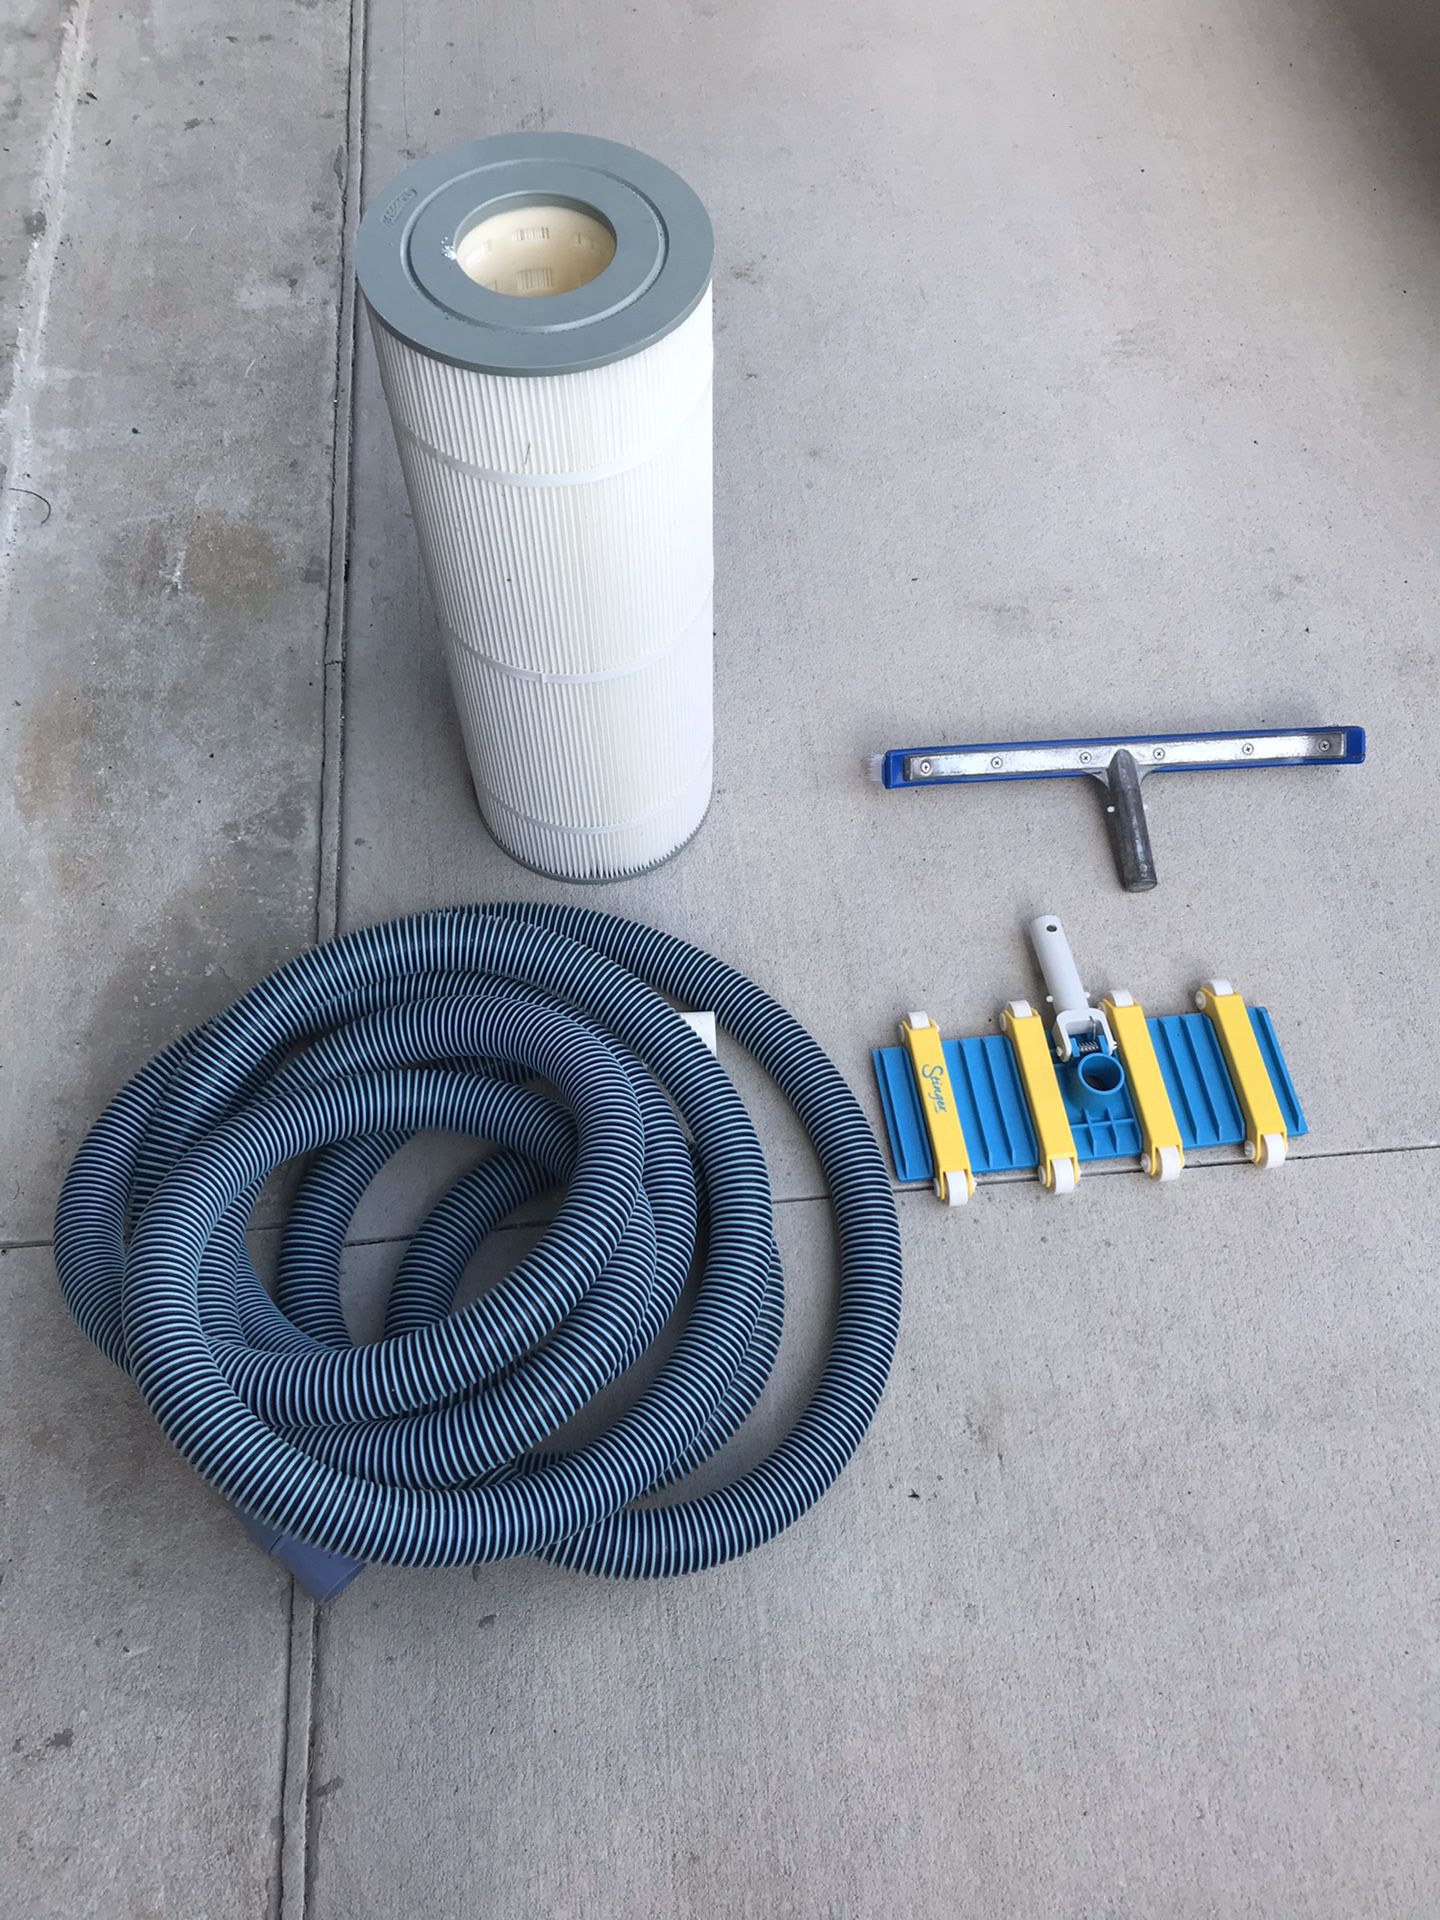 new pool filter, brush, hose and vacuum